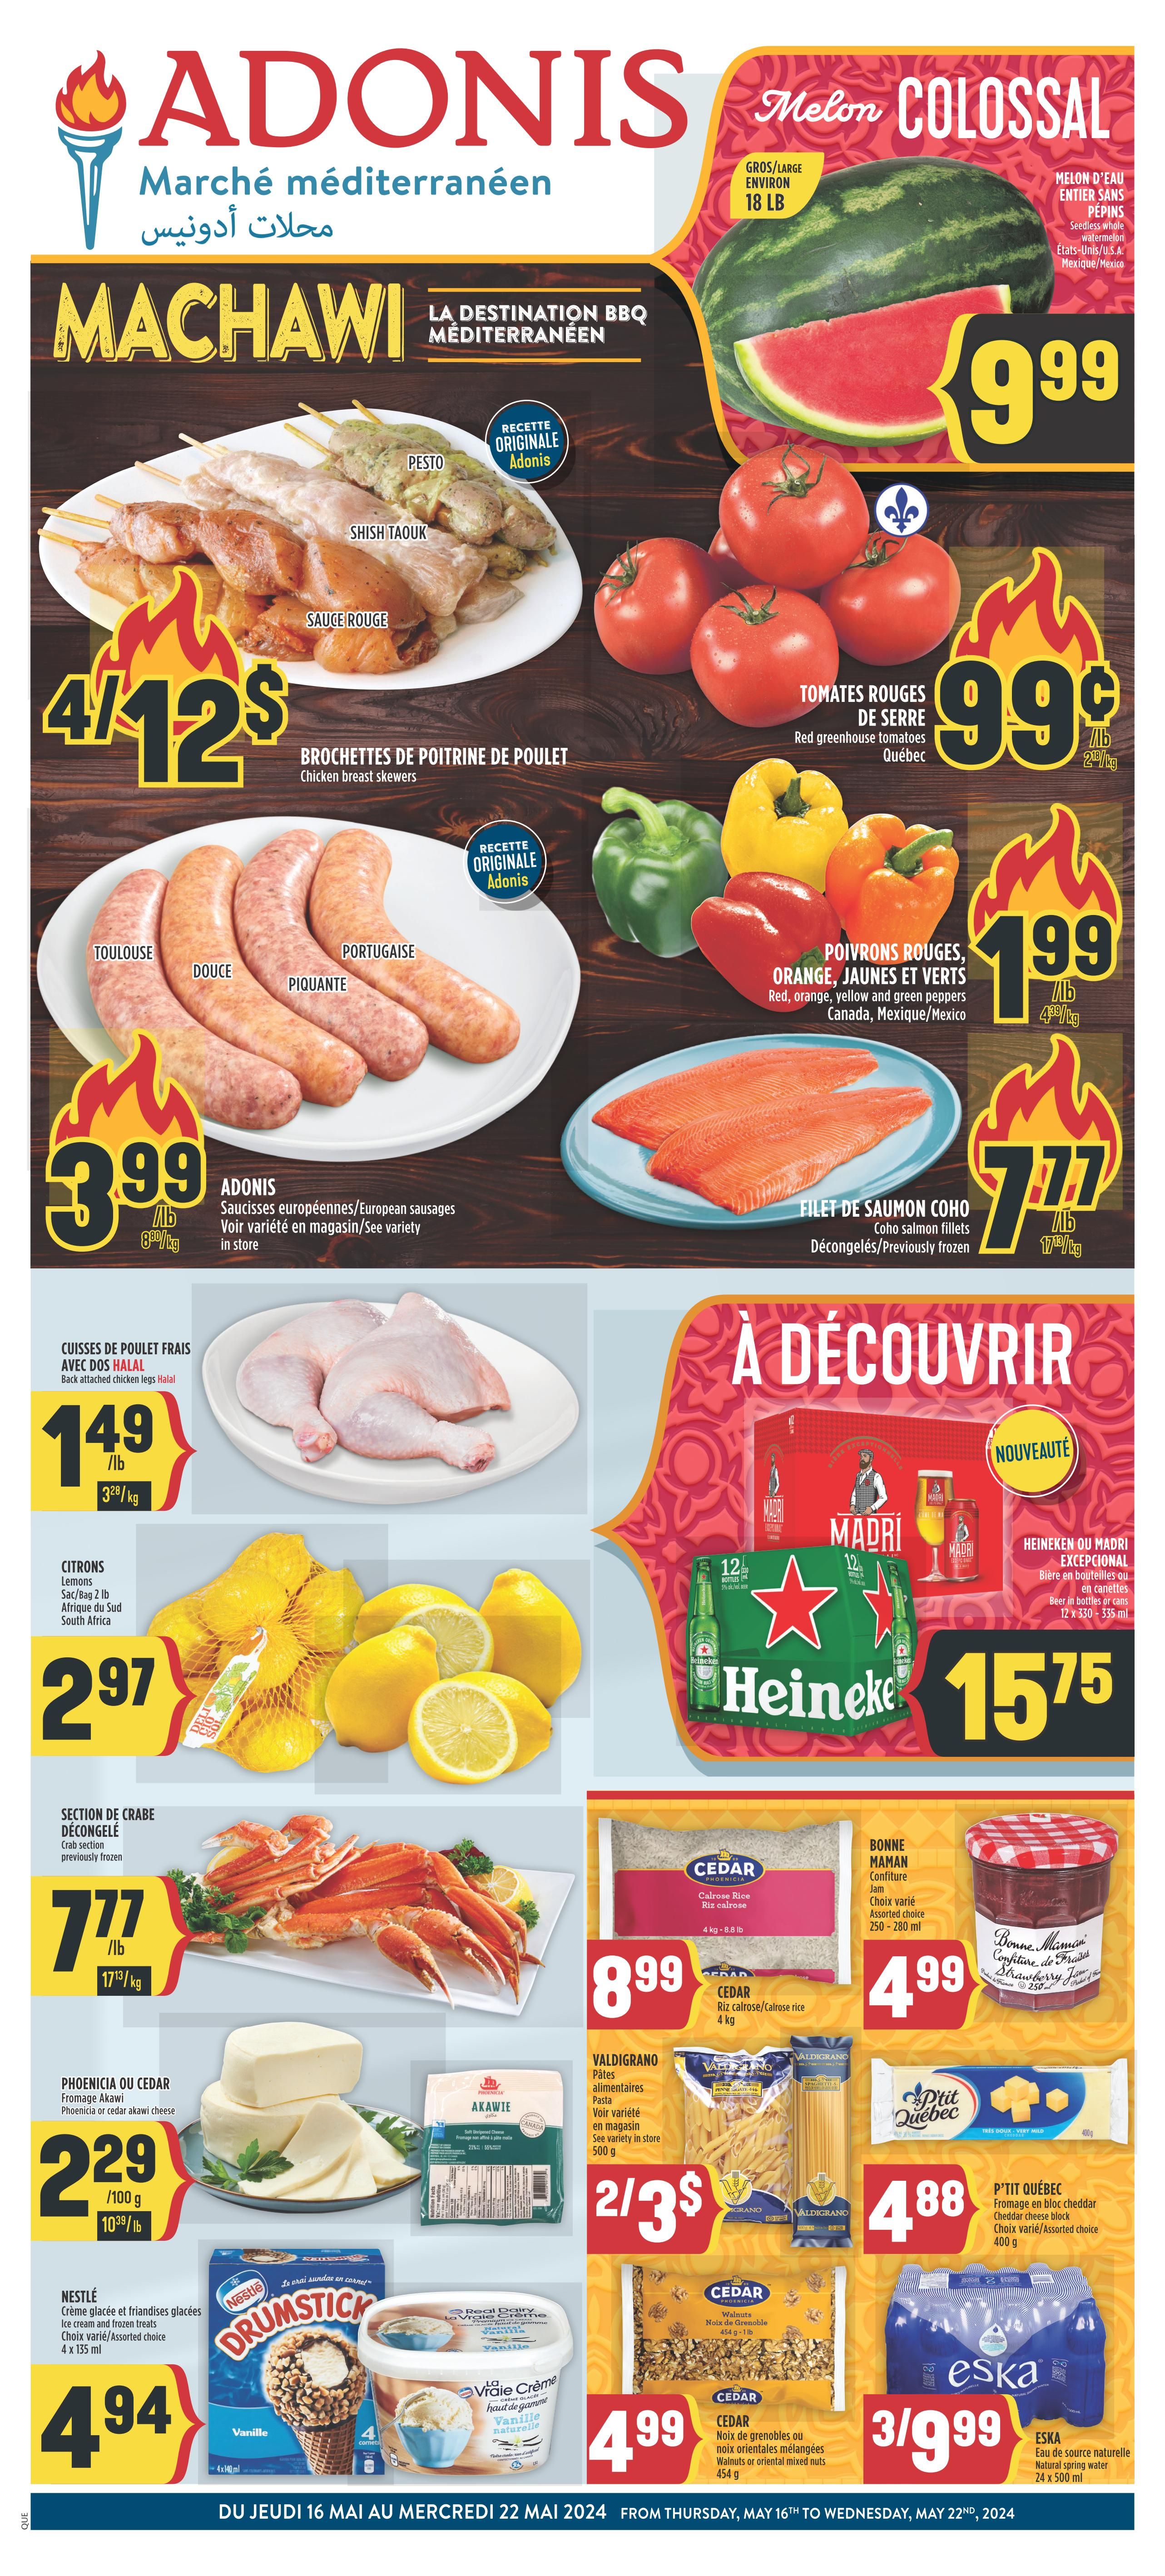 Adonis - Quebec - Weekly Flyer Specials